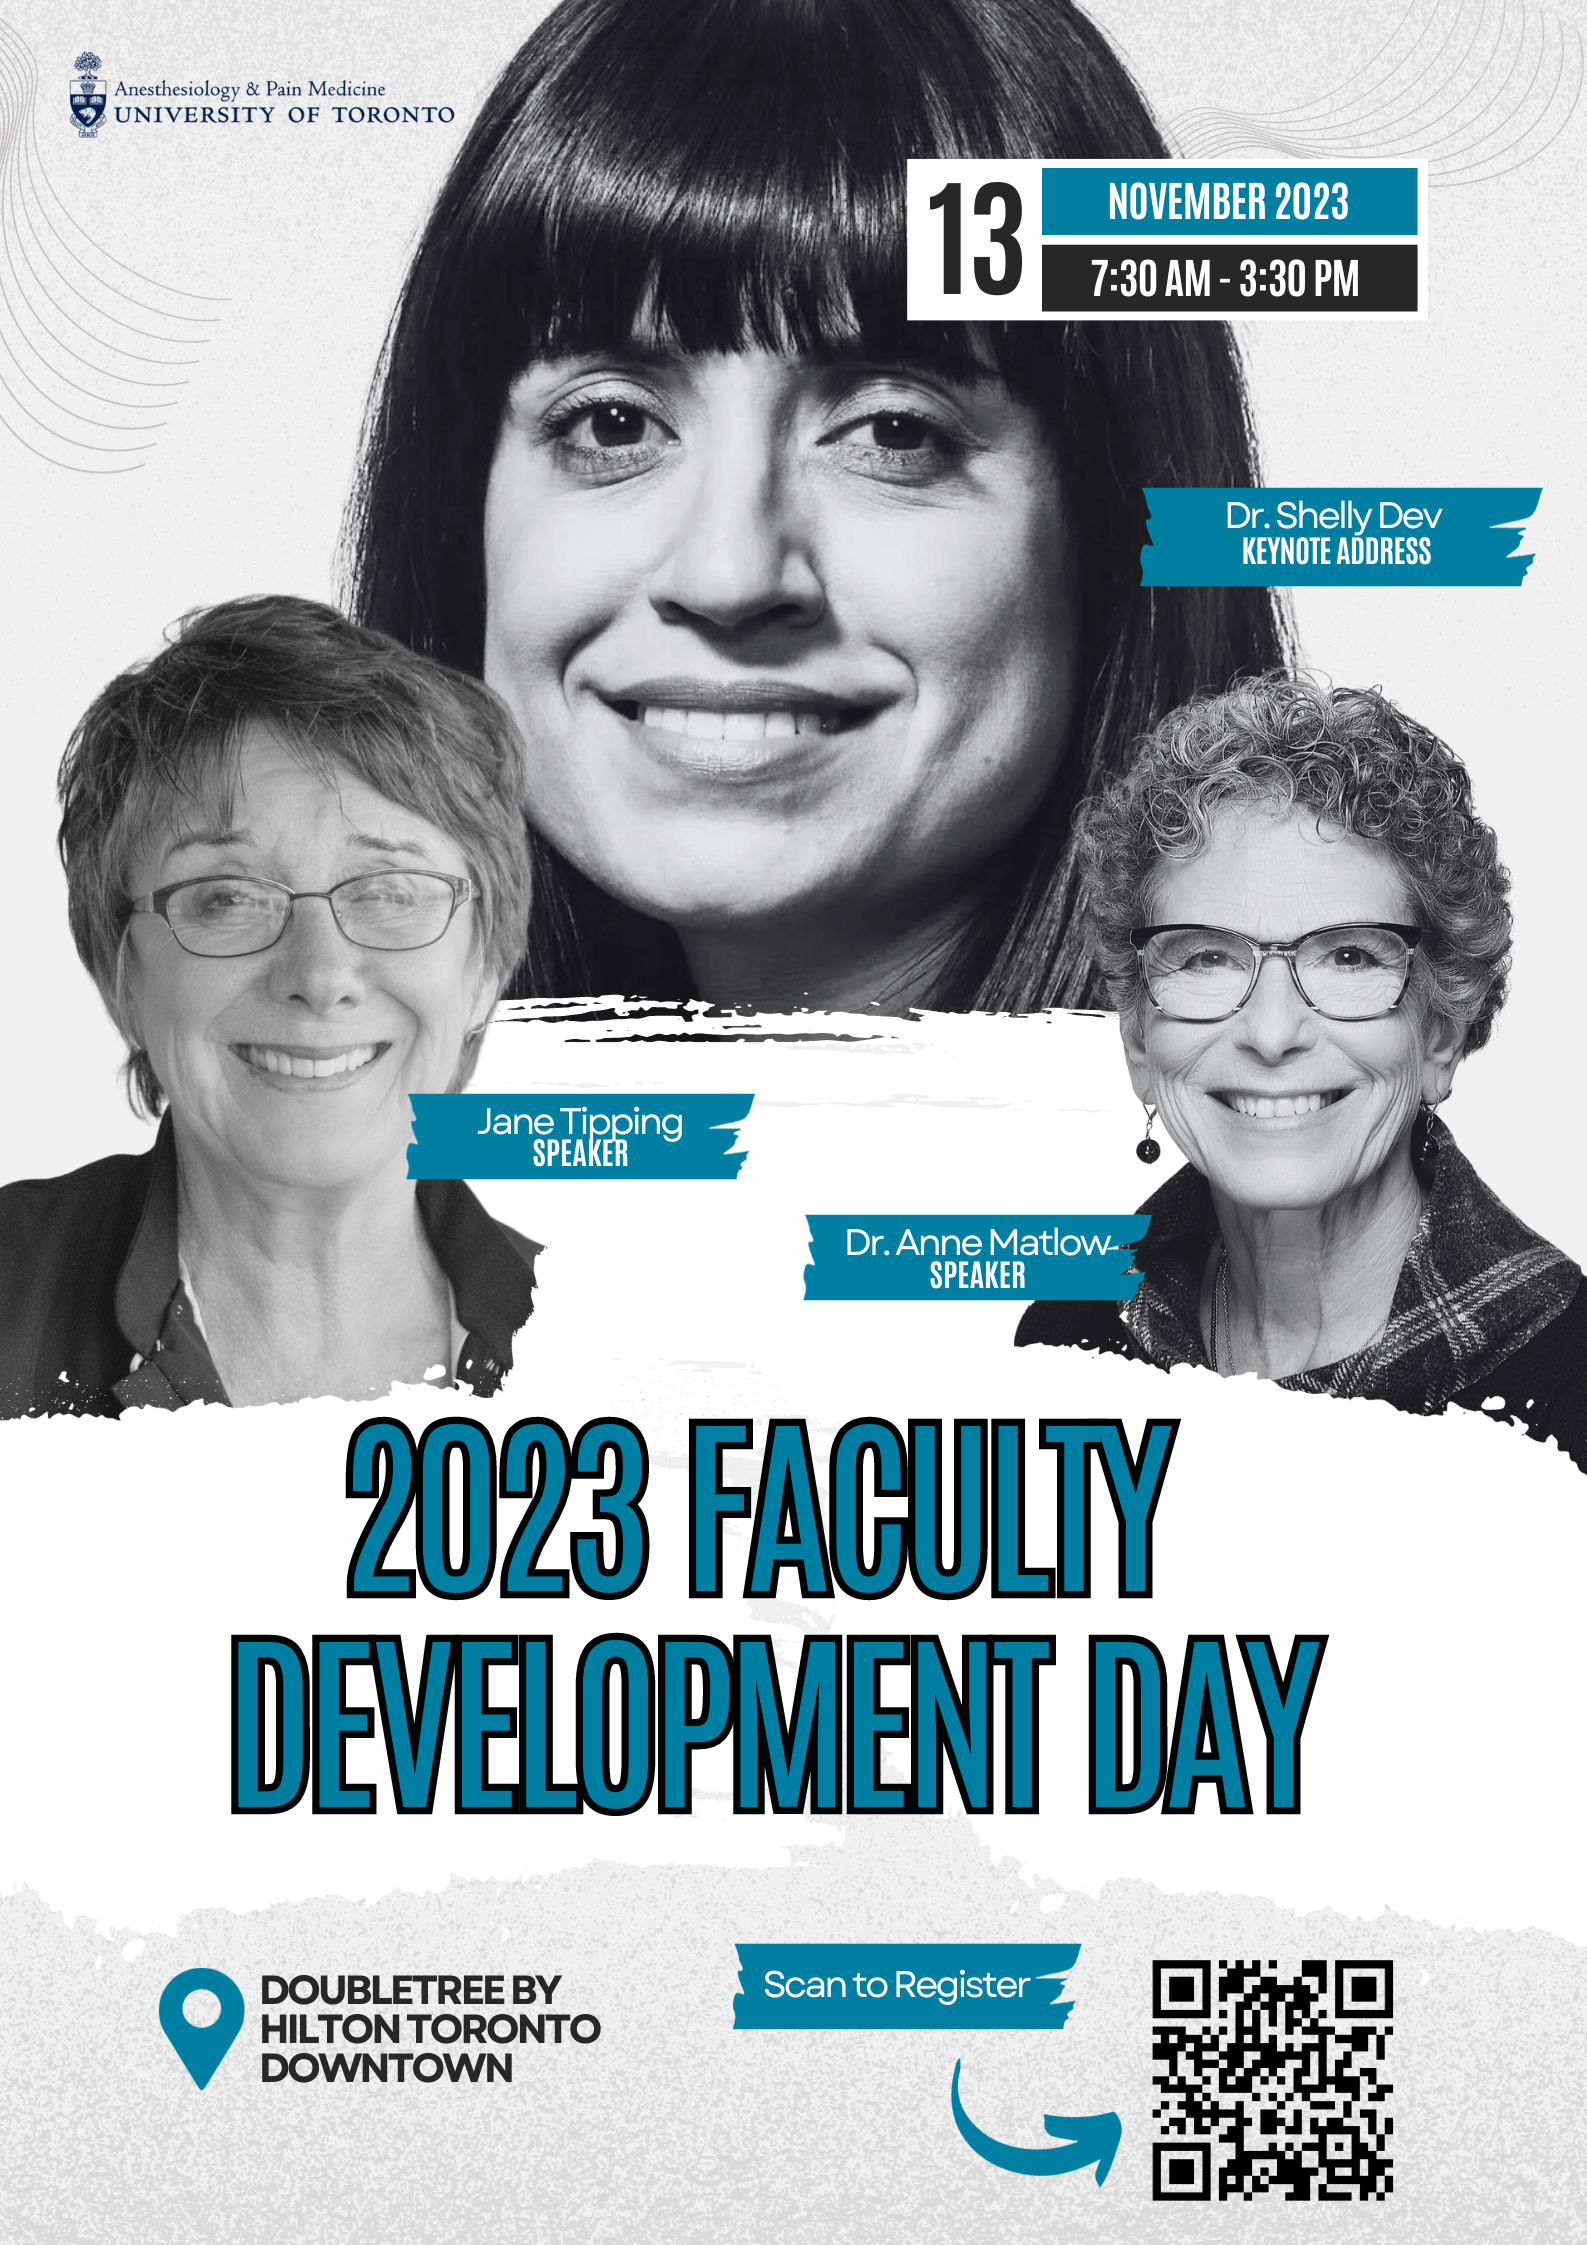 Faculty Development Day 2023 November 13, 2023